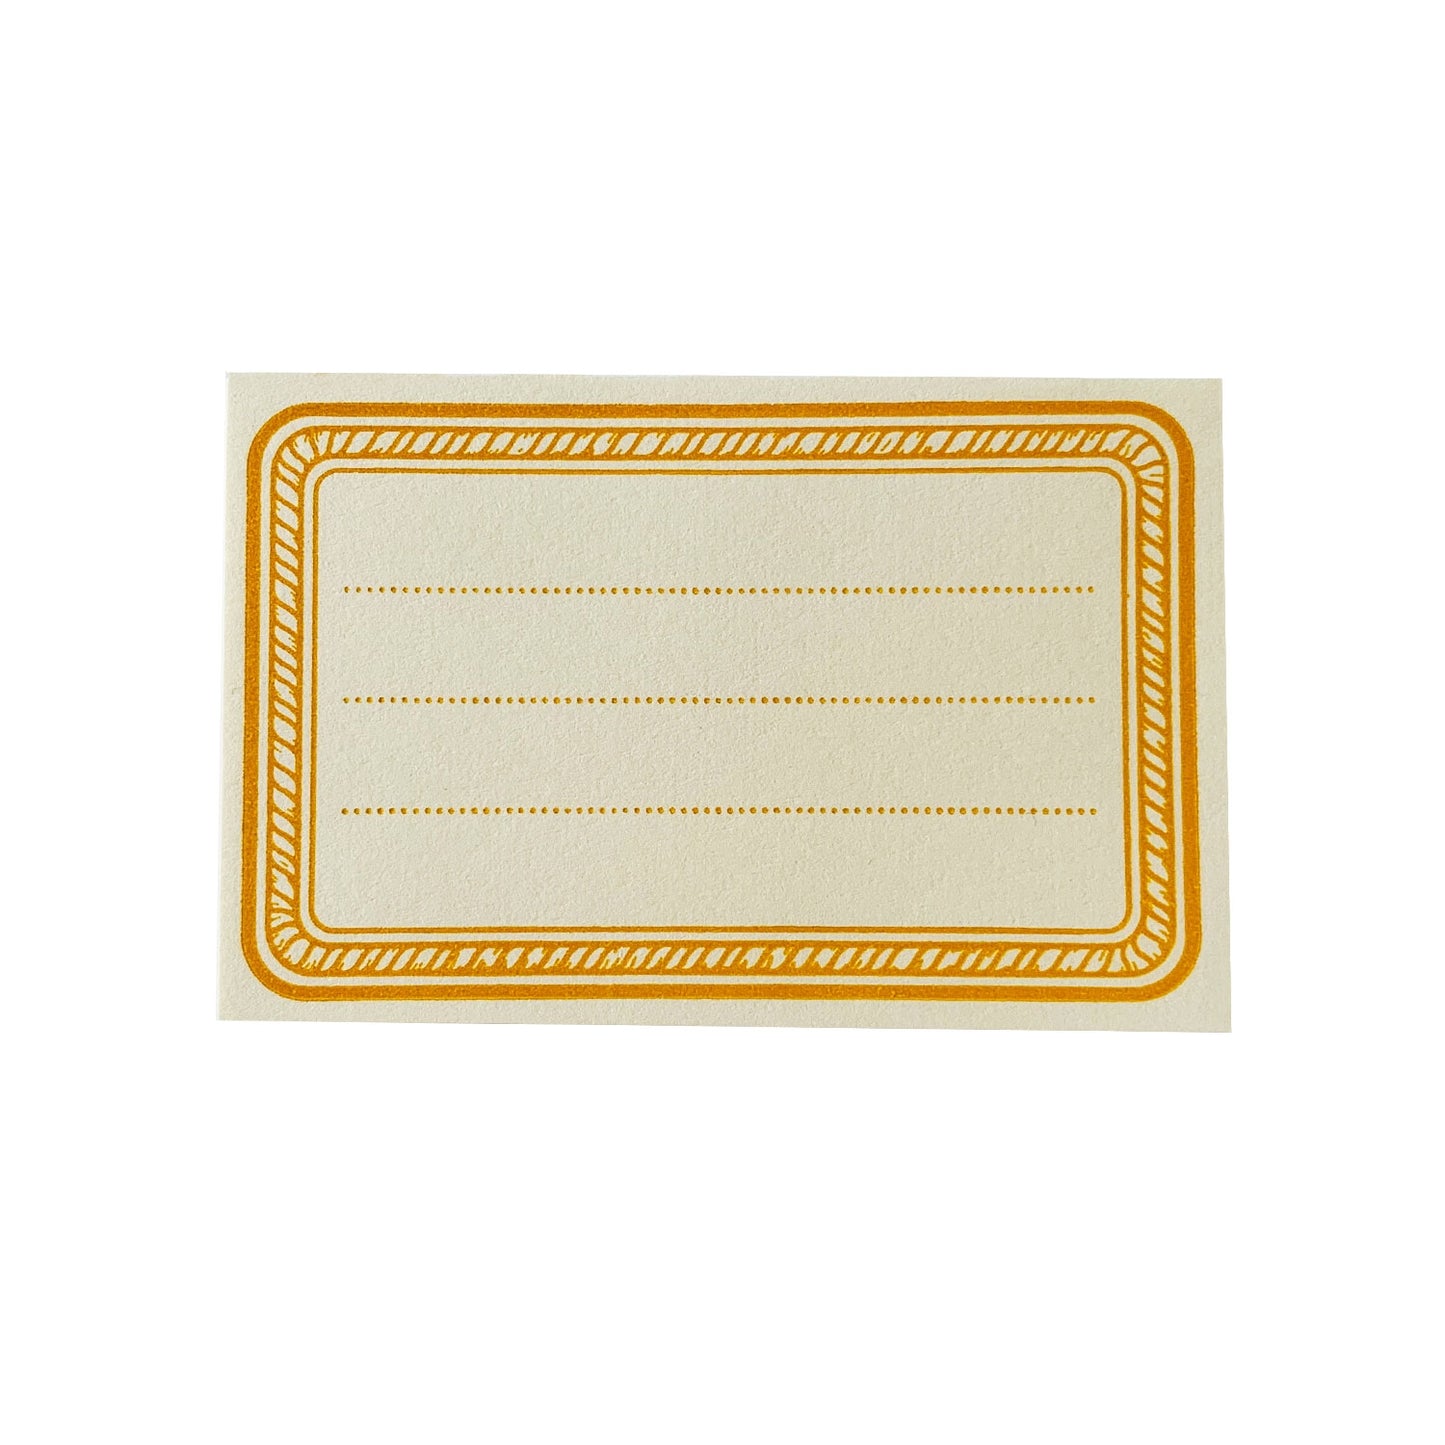 Yellow Rope Letterpress Bookplates - Set of 8